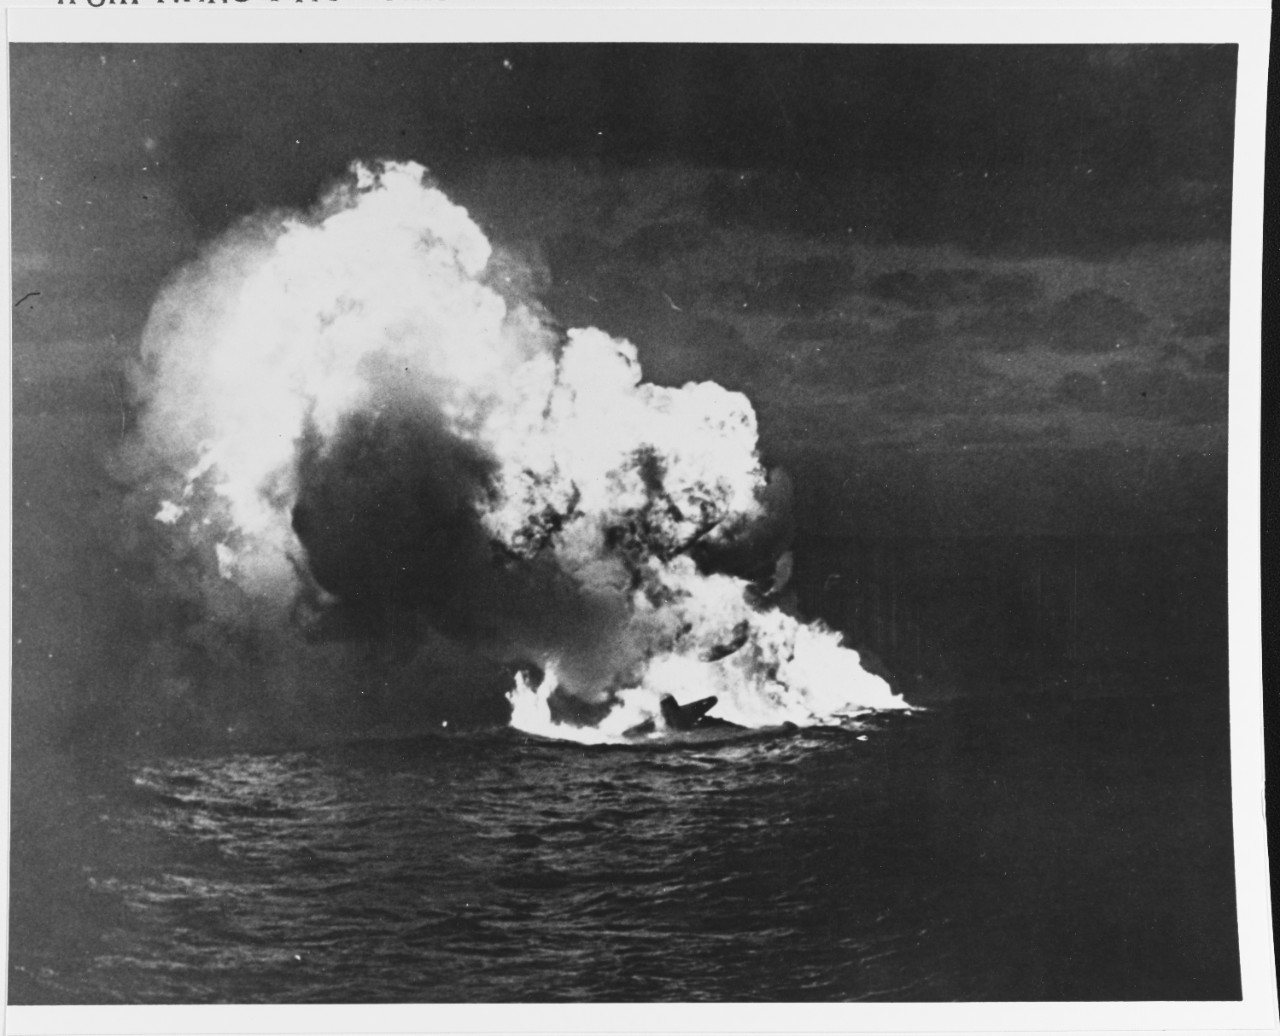 Carrier raids on the Marianas, February 1944